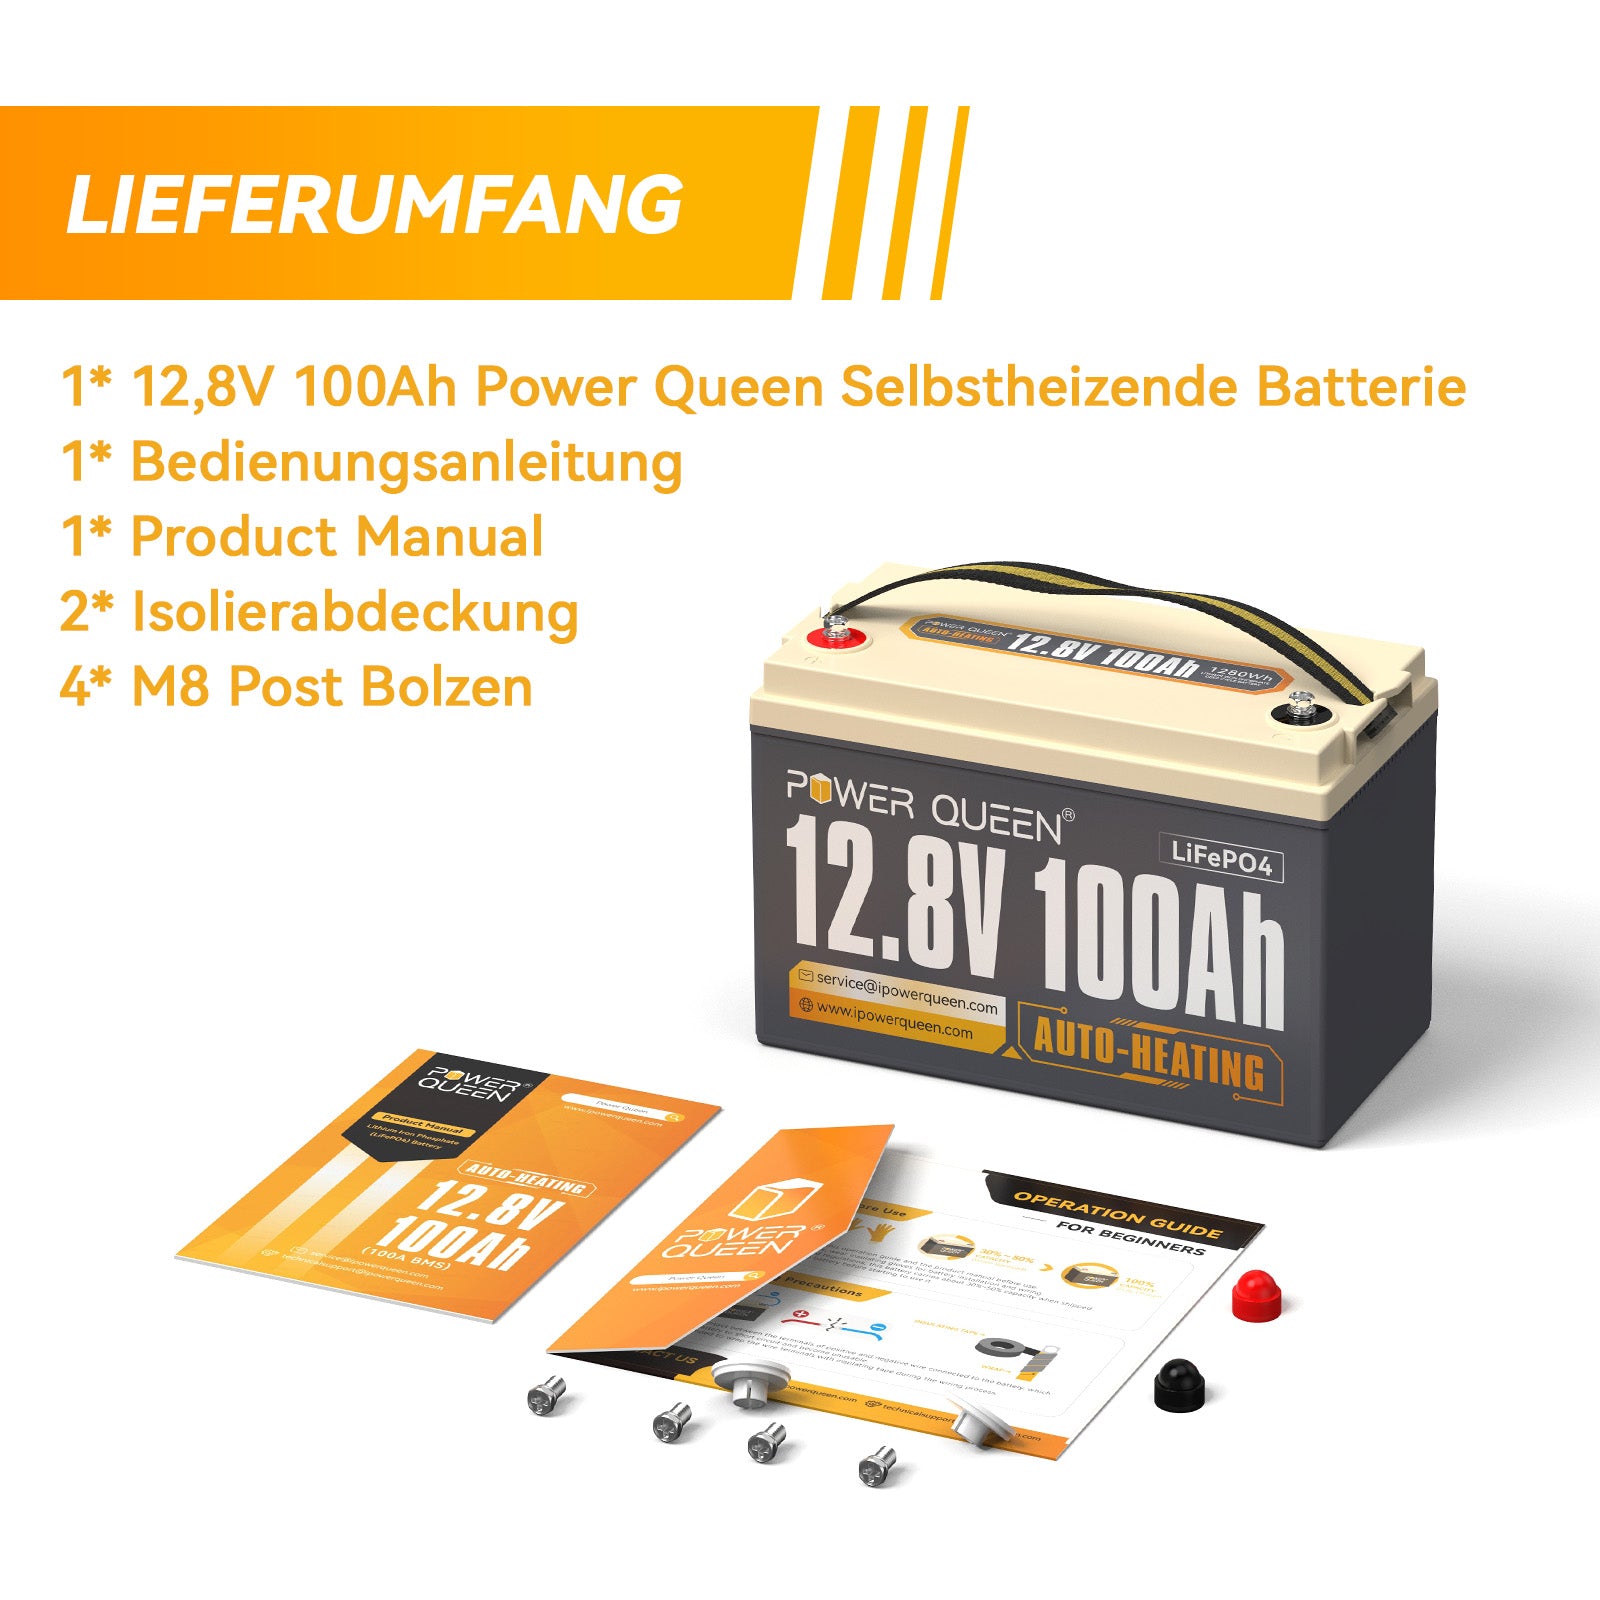 【TVA 0%】 Batterie LiFePO4 auto-chauffante Power Queen 12,8 V 100 Ah, BMS 100 A intégré